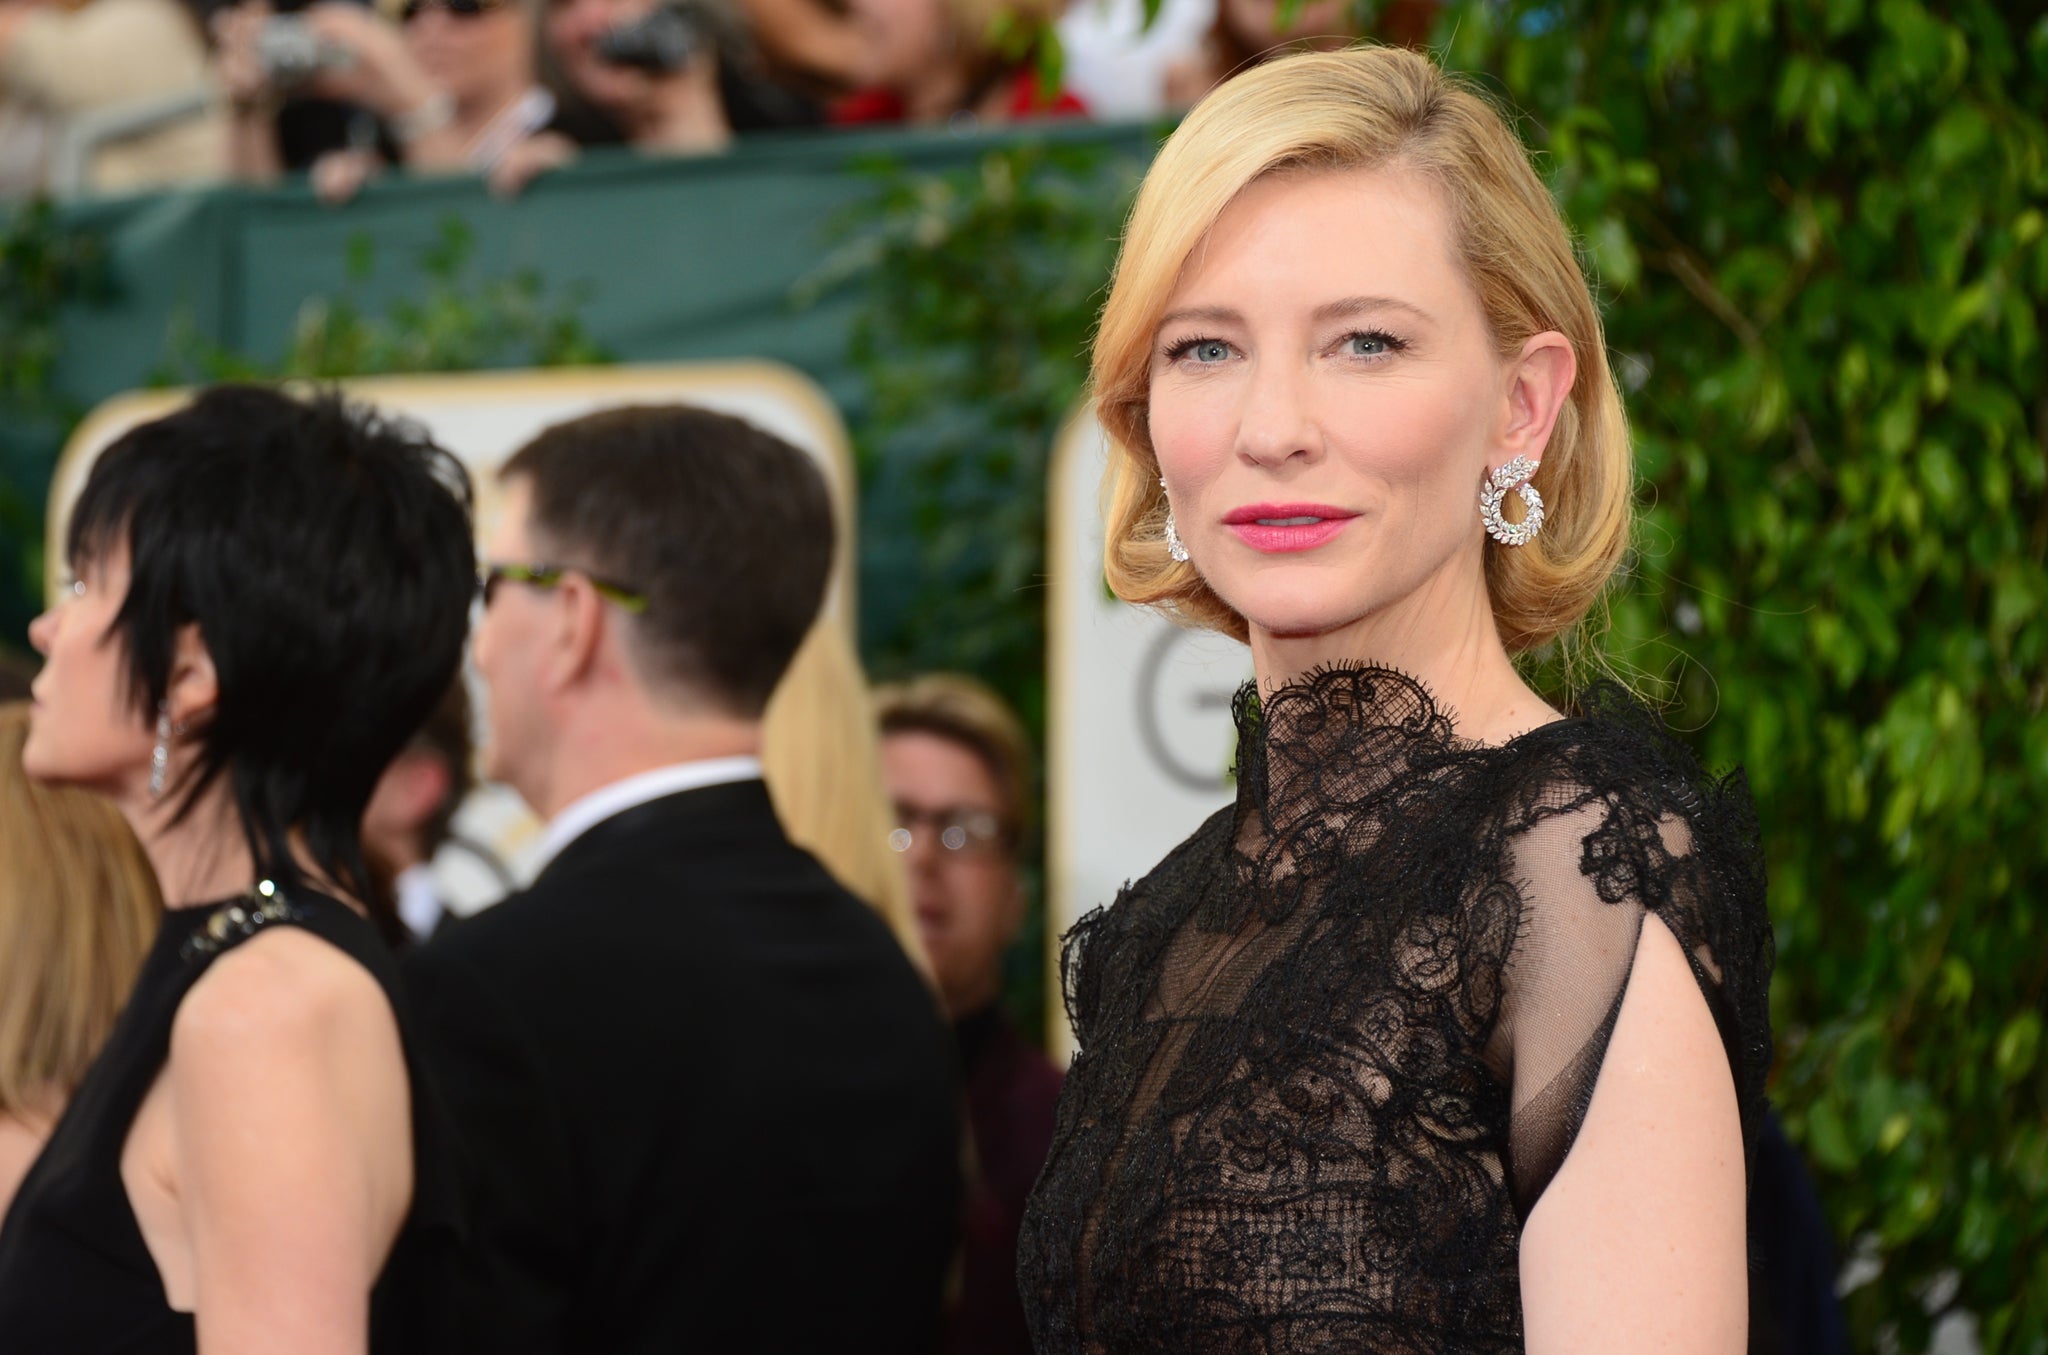 Cate Blanchett winning Best Actress for Blue Jasmine 